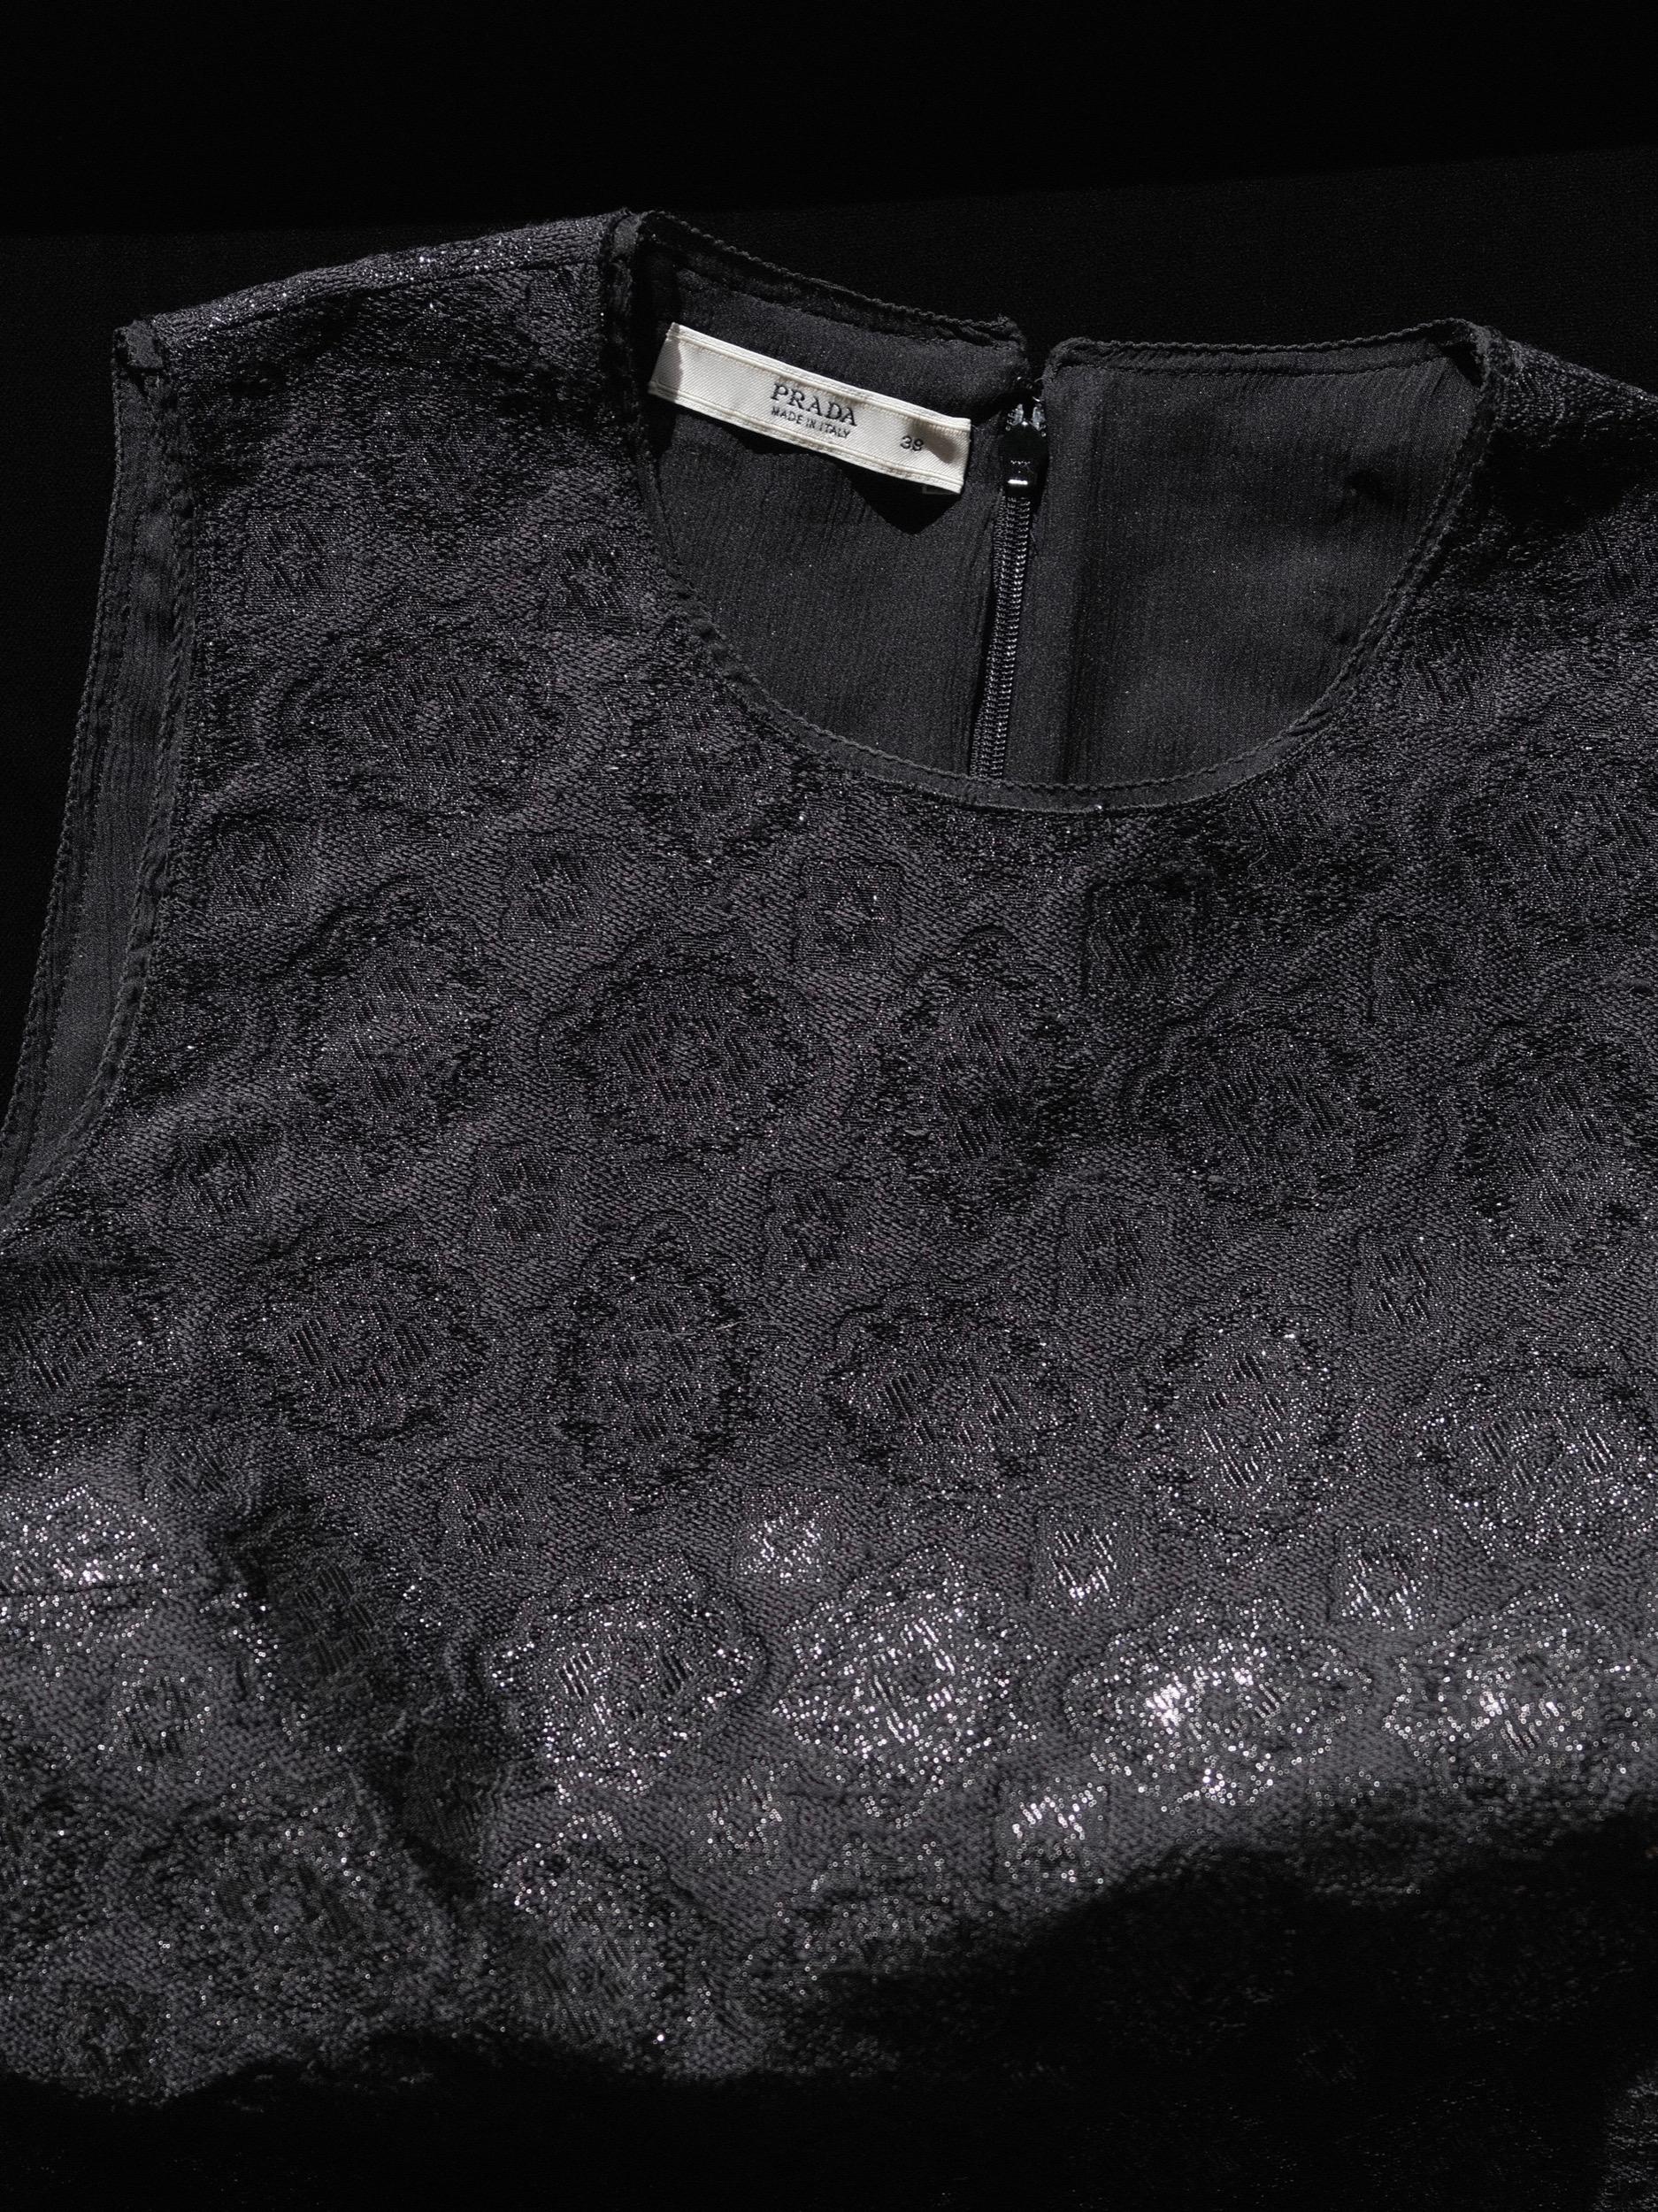 Prada Brocade Top Metallic Black Silk SS08 Size 38 In Good Condition For Sale In Los Angeles, CA